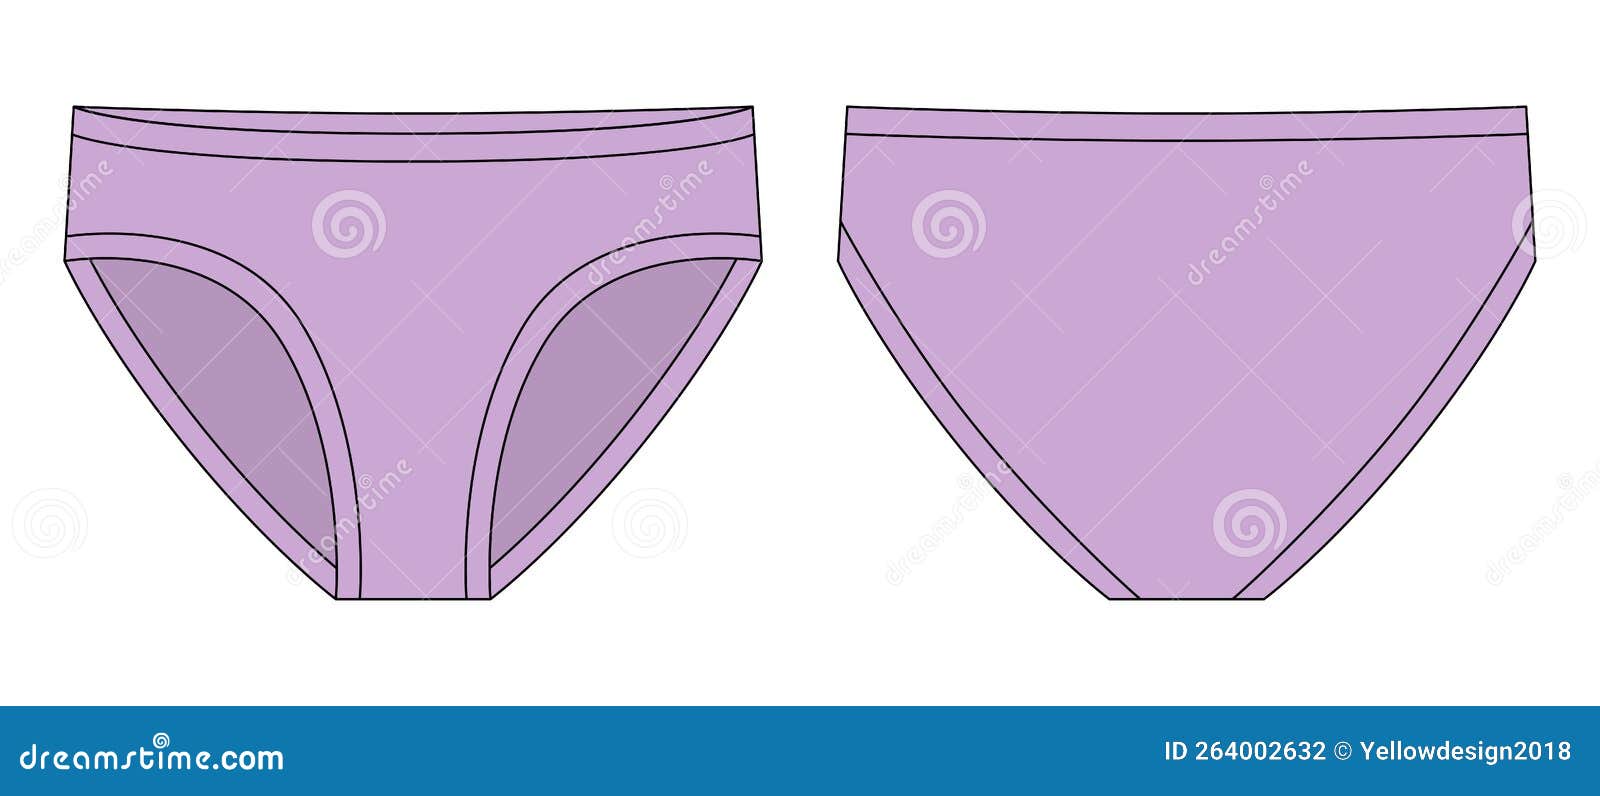 Premium Vector  Girls knickers technical sketch illustration pink color  children's underpants